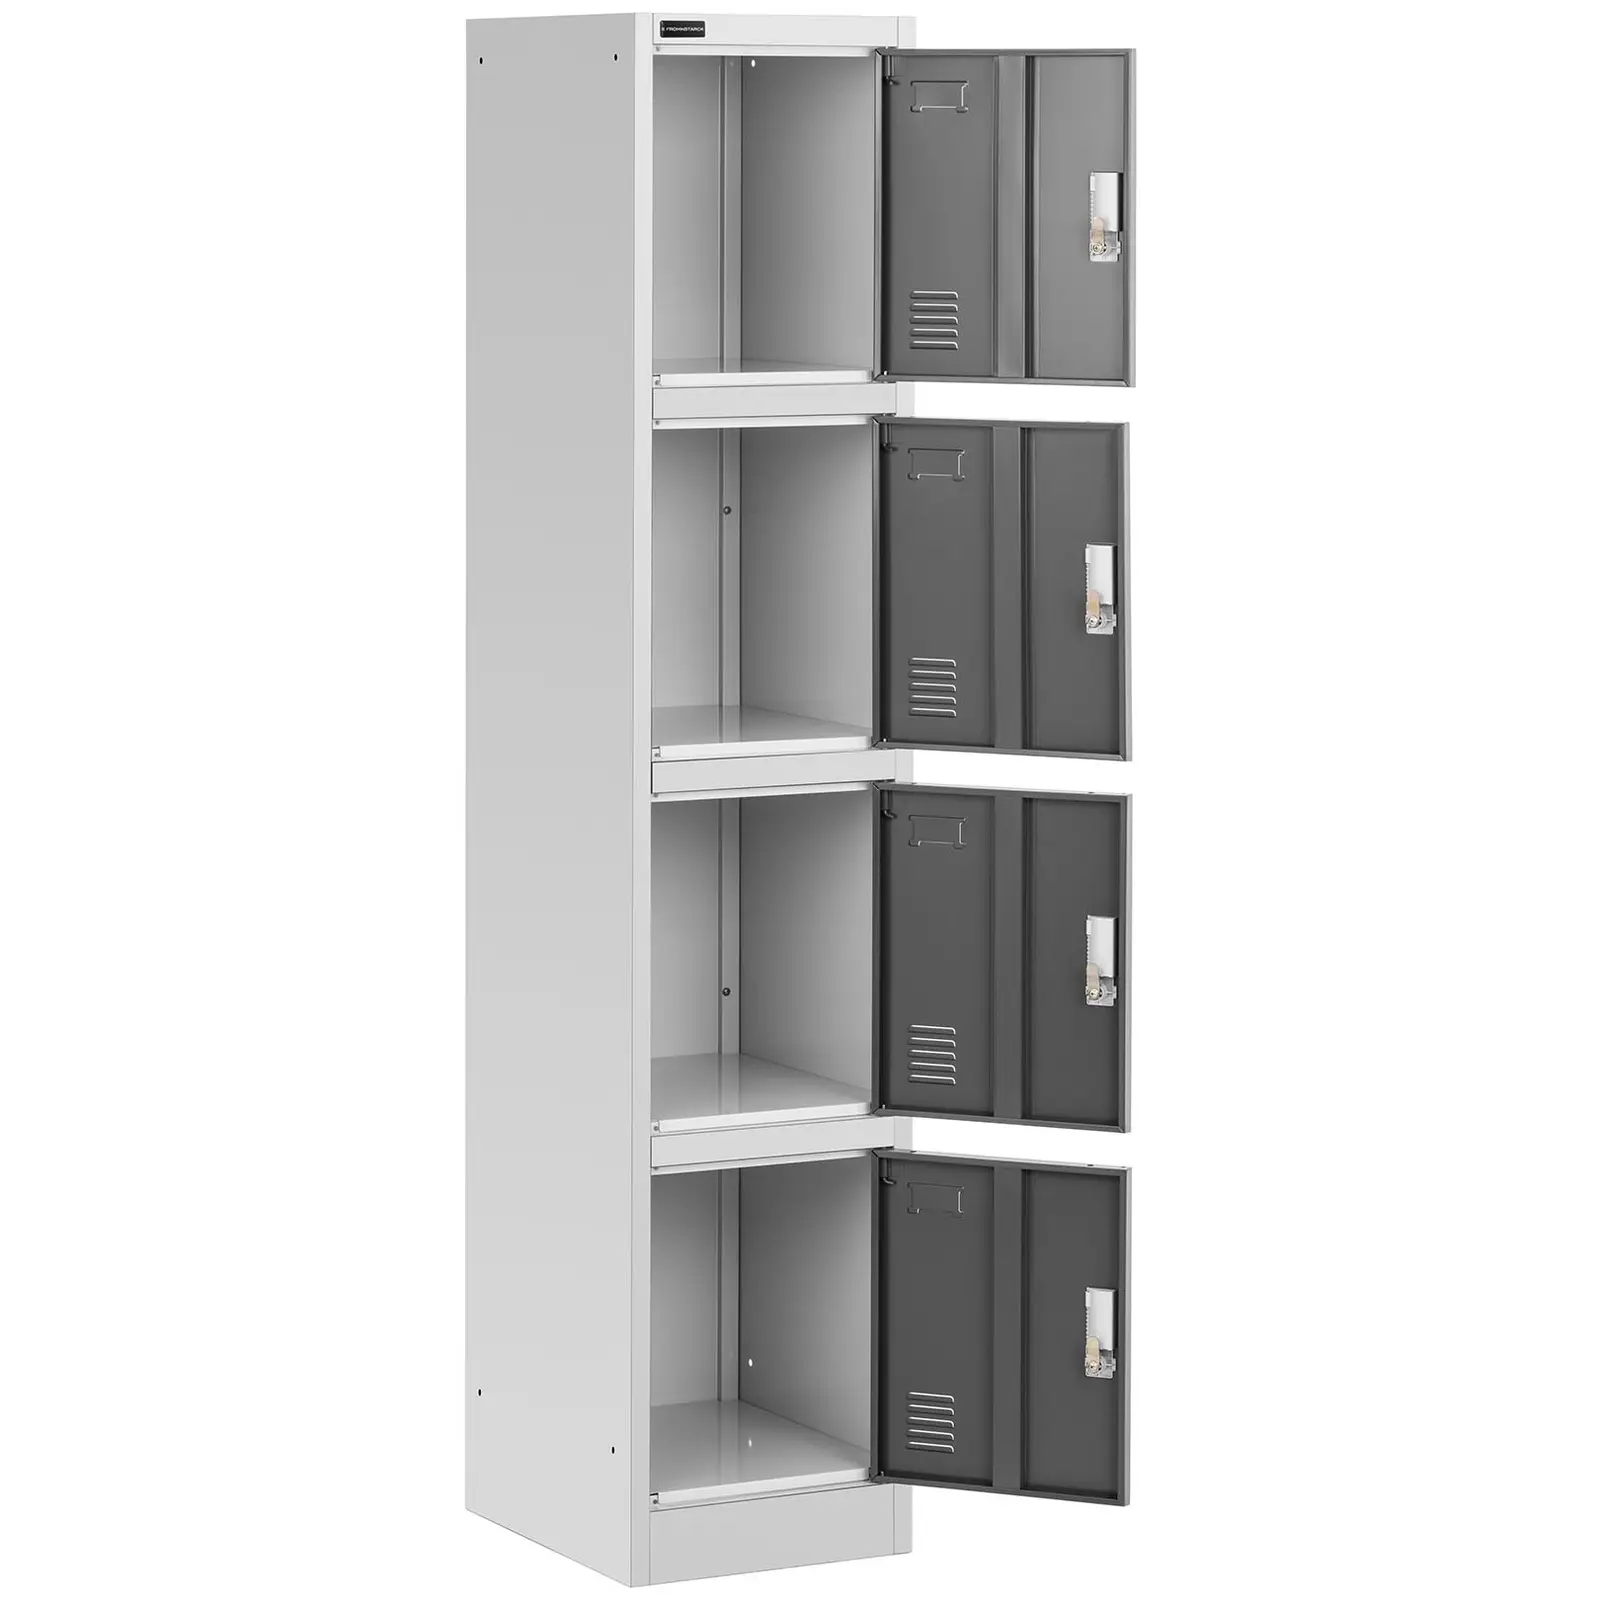 Metal Storage Locker - 4 compartments - grey